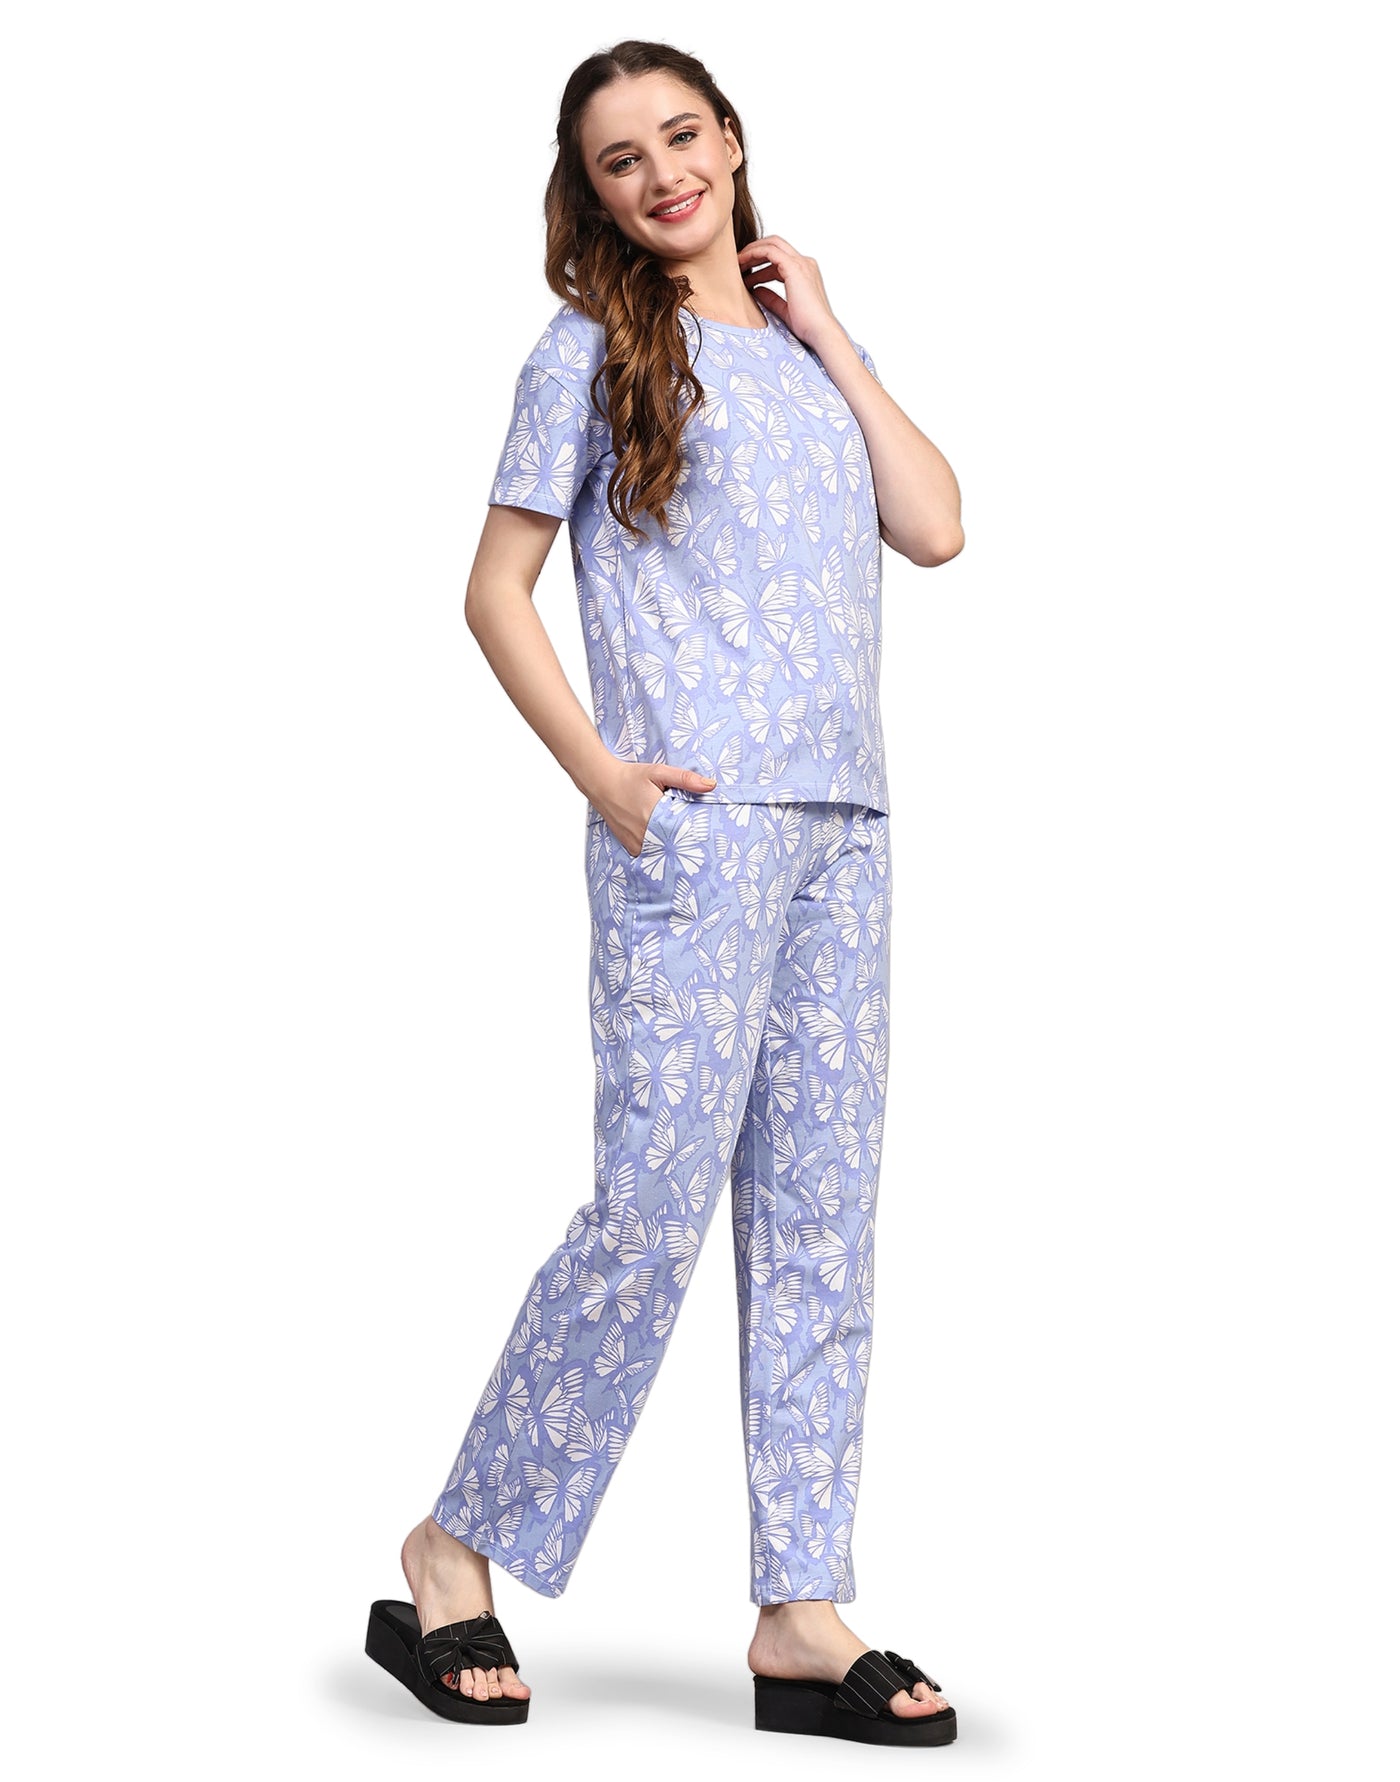 Pyjama Set for Women-Light Blue Butterfly Print